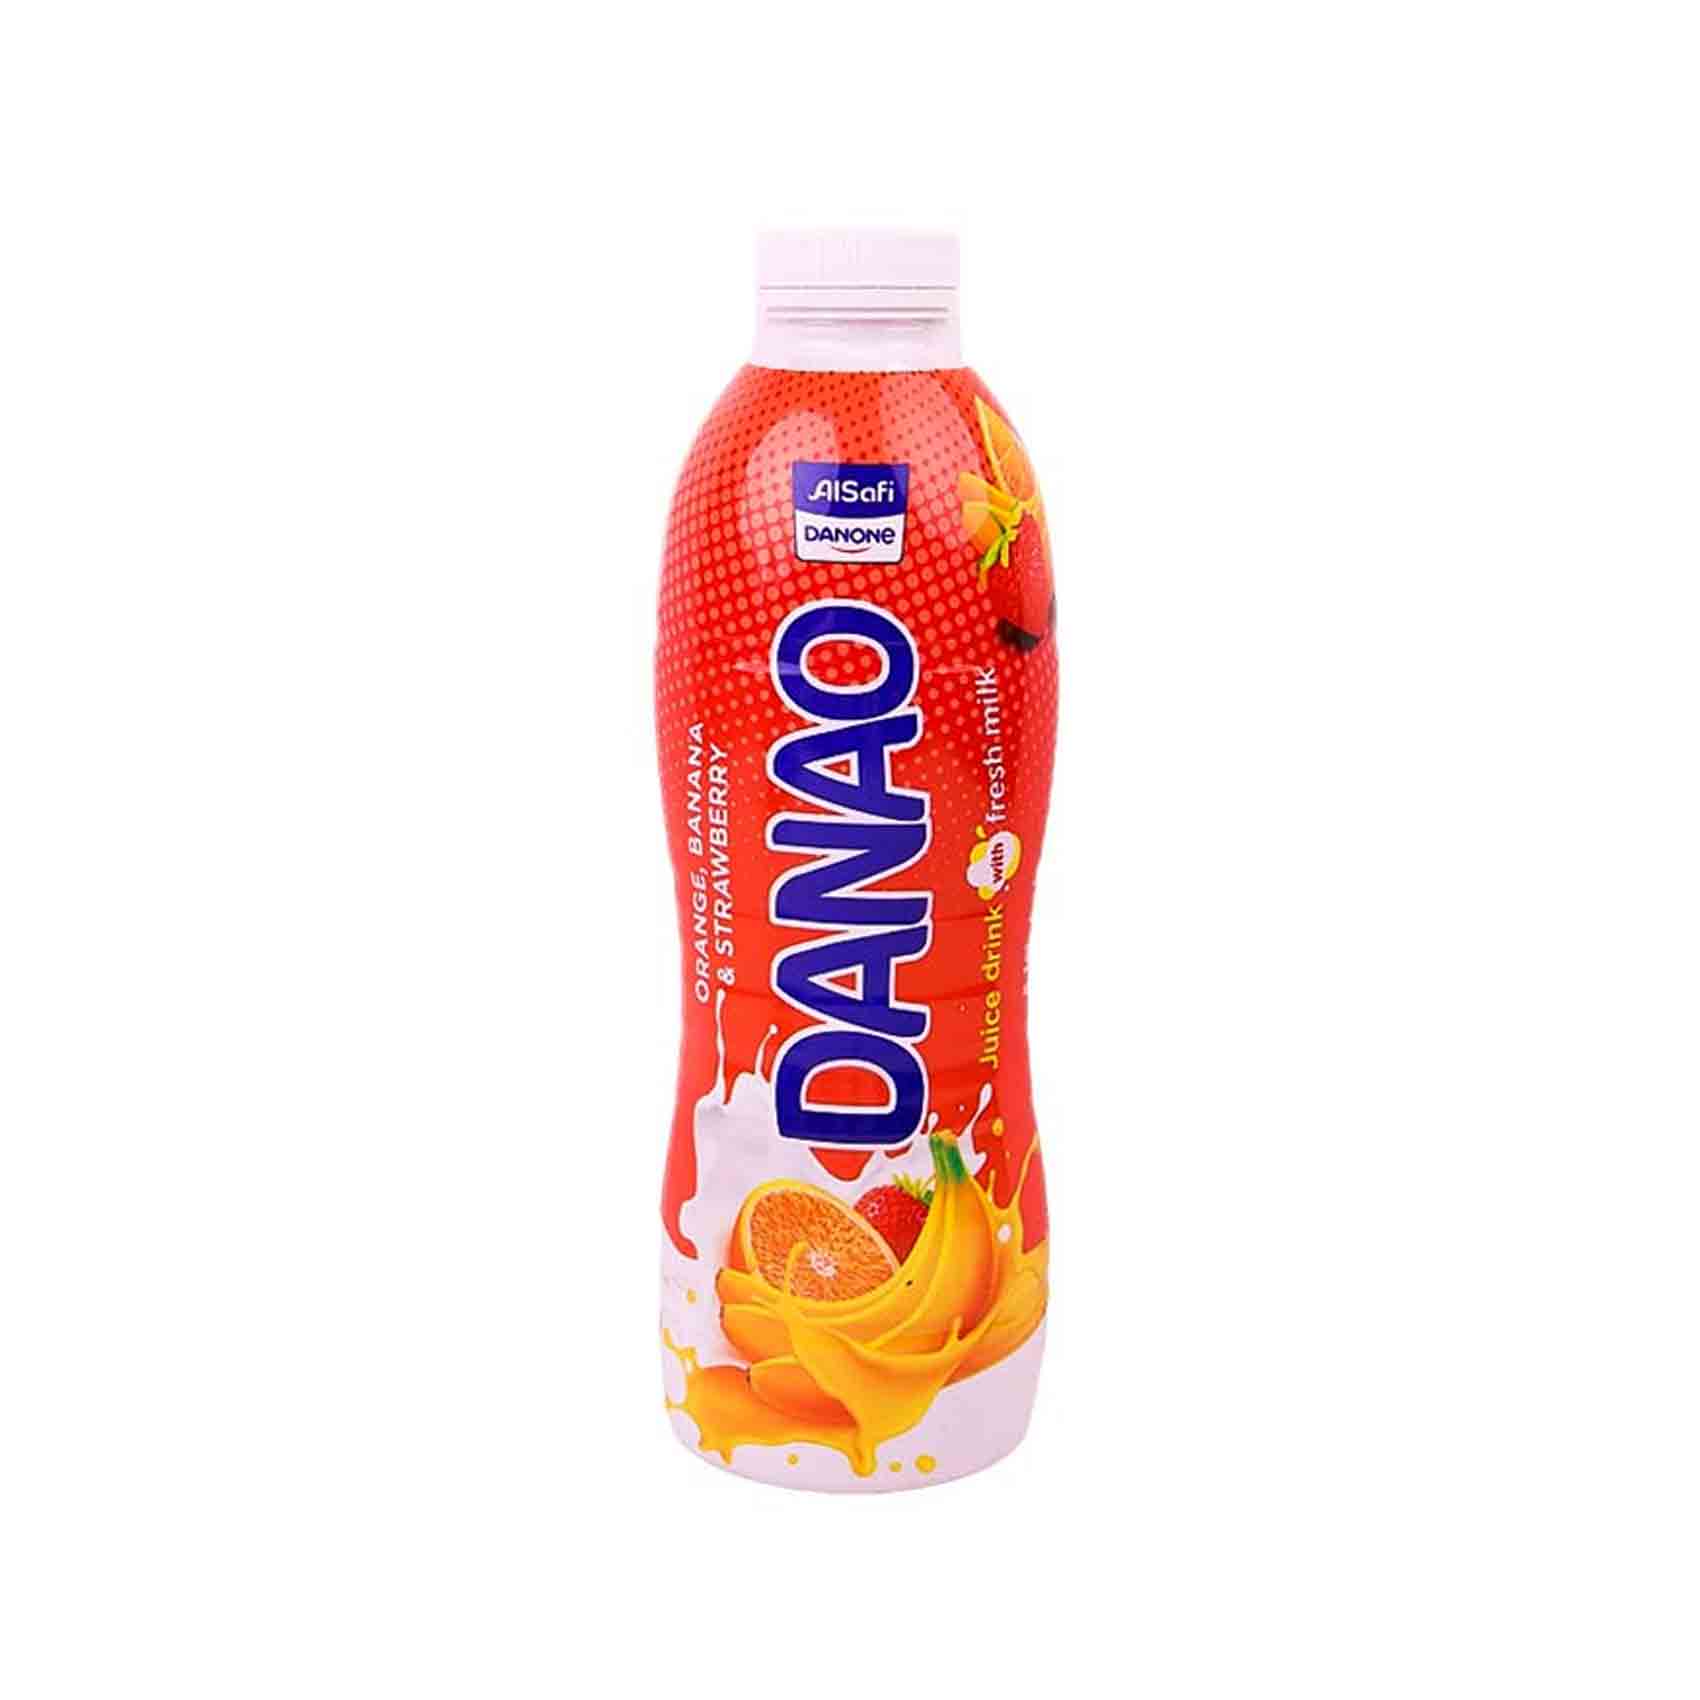 Danao Juice Milk Drink Orange And Banana And Strawberry Flavor 900 Ml